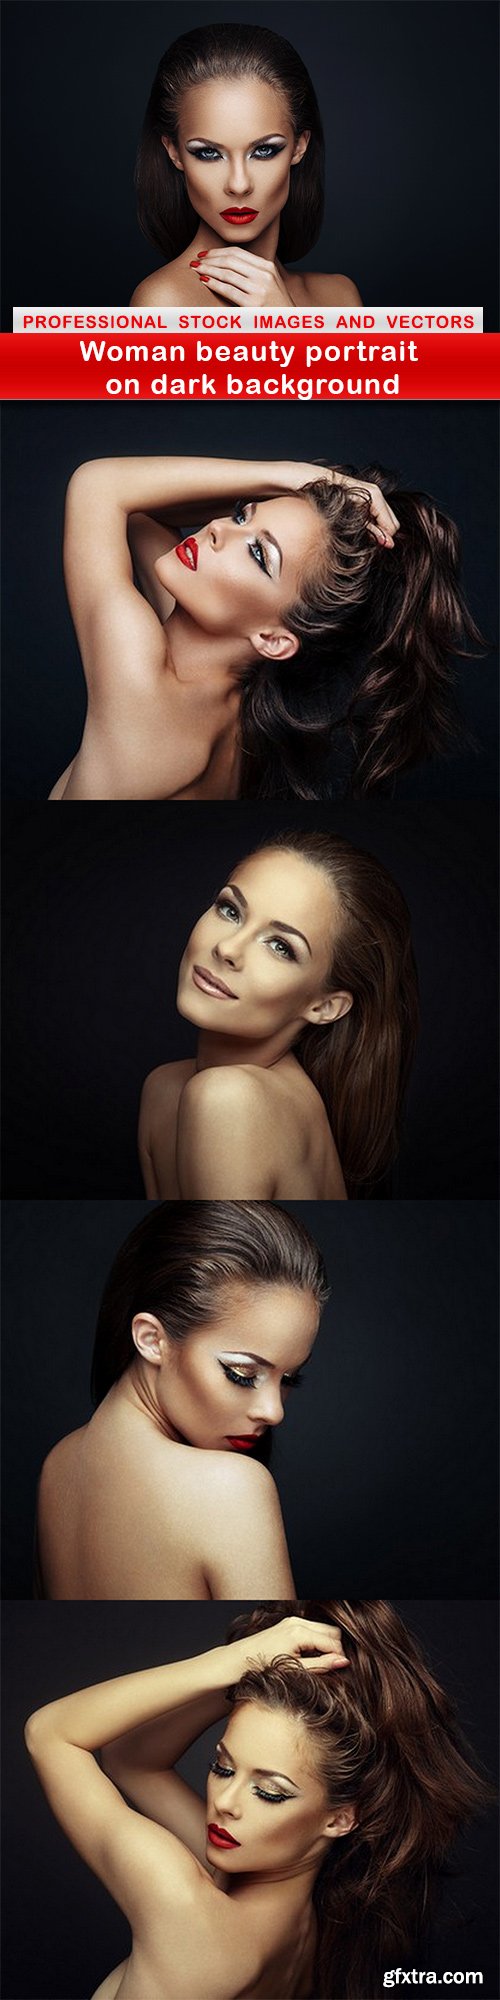 Woman beauty portrait on dark background - 5 UHQ JPEG